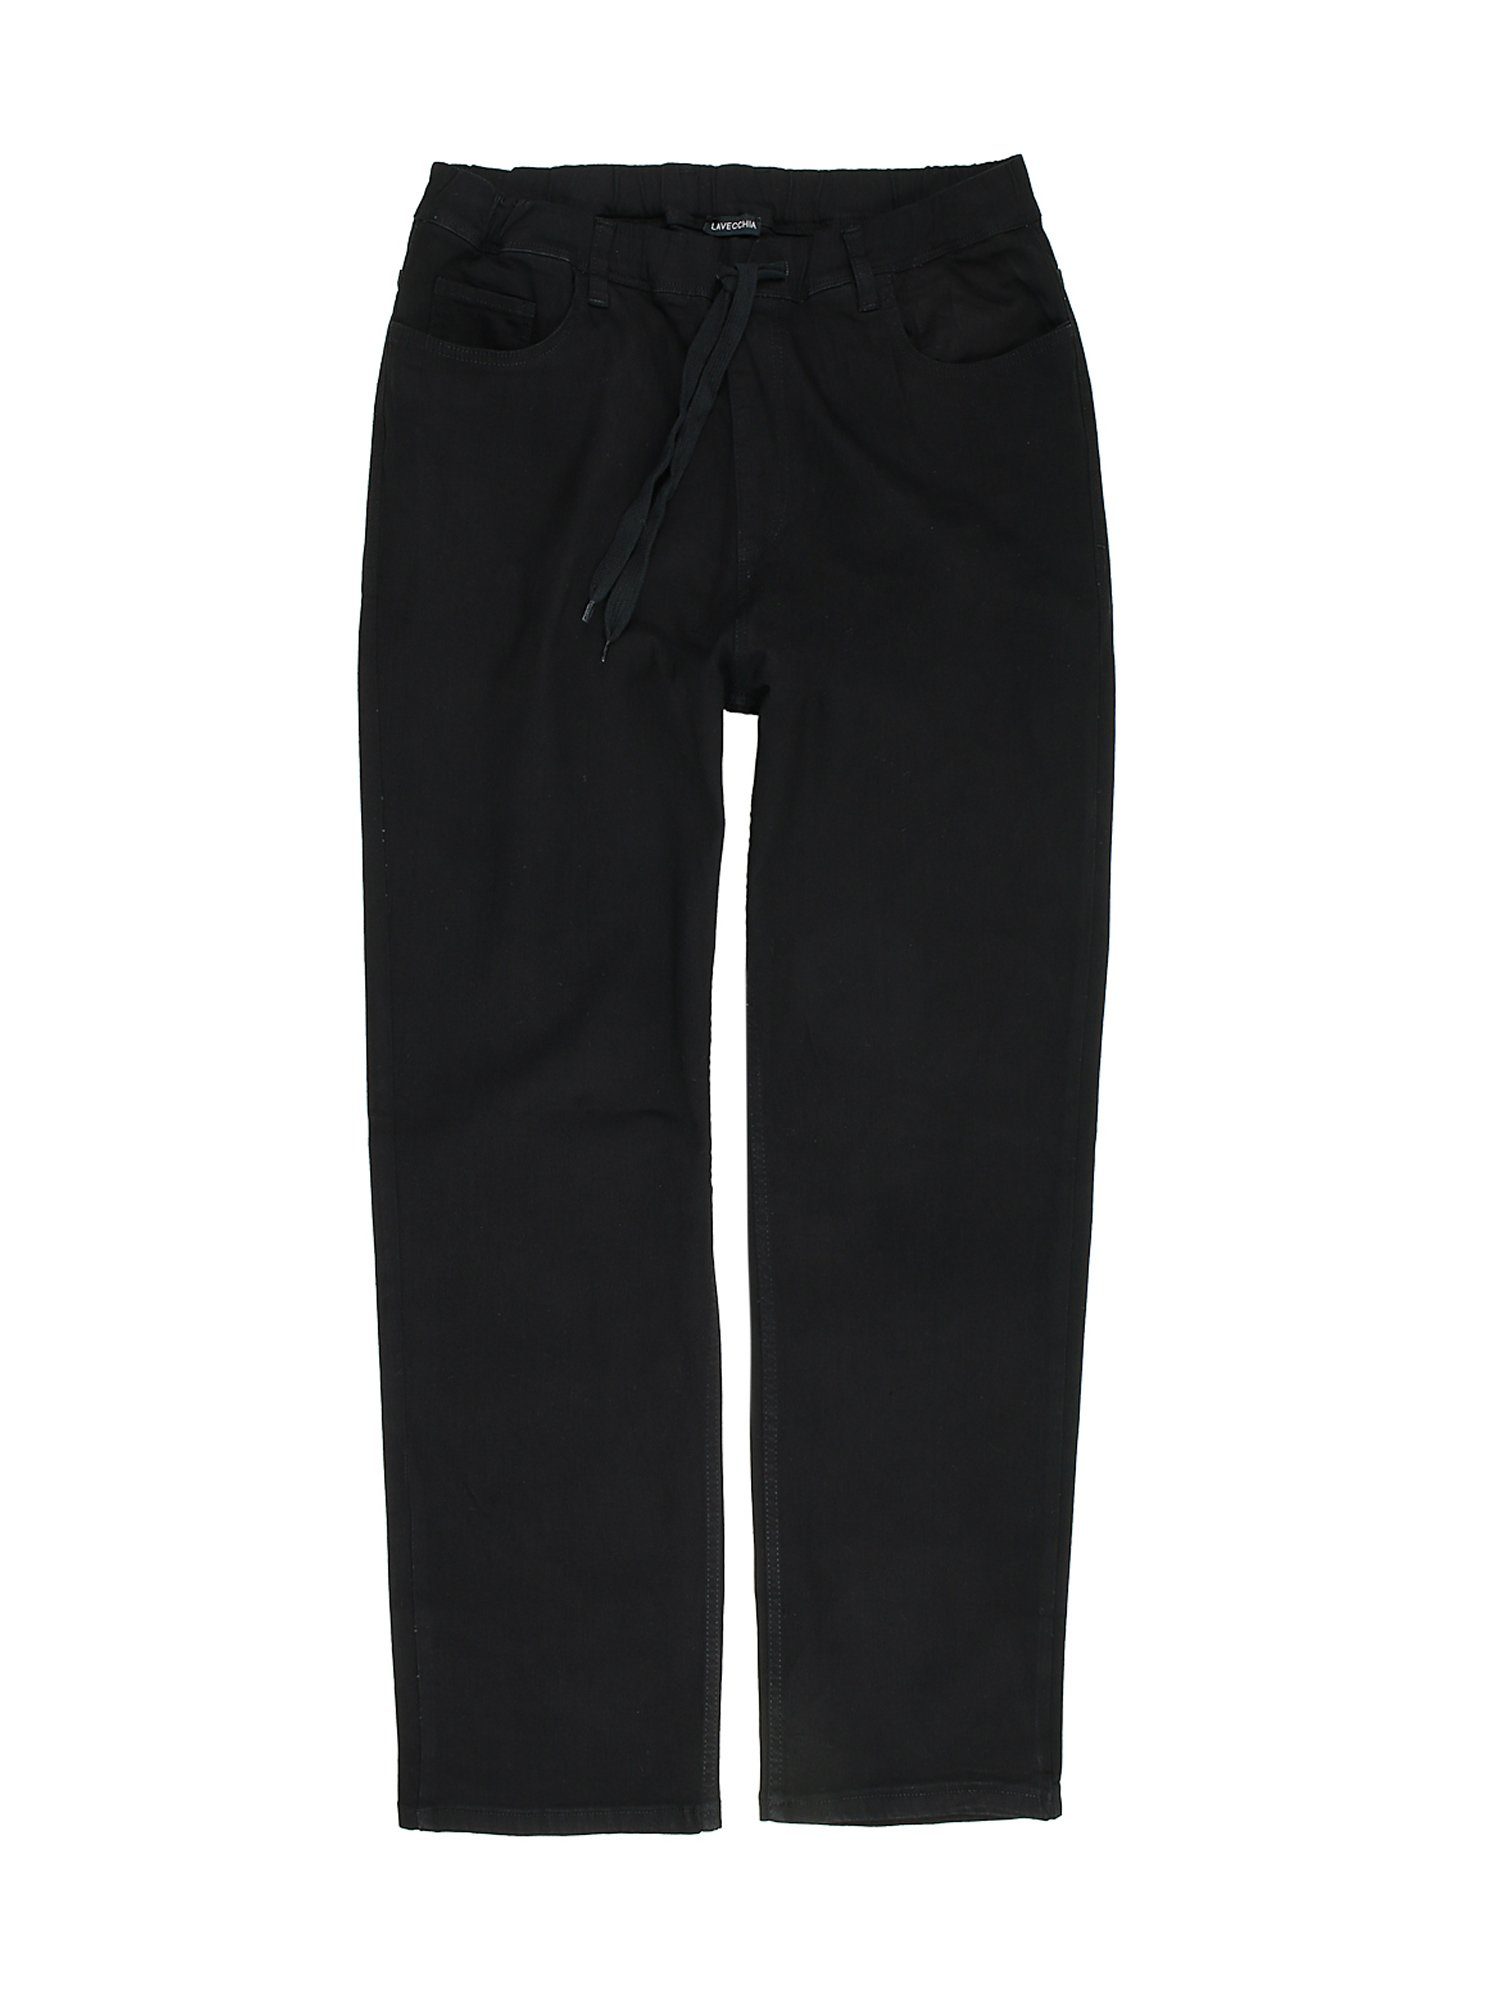 Jeanshose Hose Herren schwarz Übergrößen LV-502 Comfort-fit-Jeans im Sweat Jeans Jogger-Stil Lavecchia